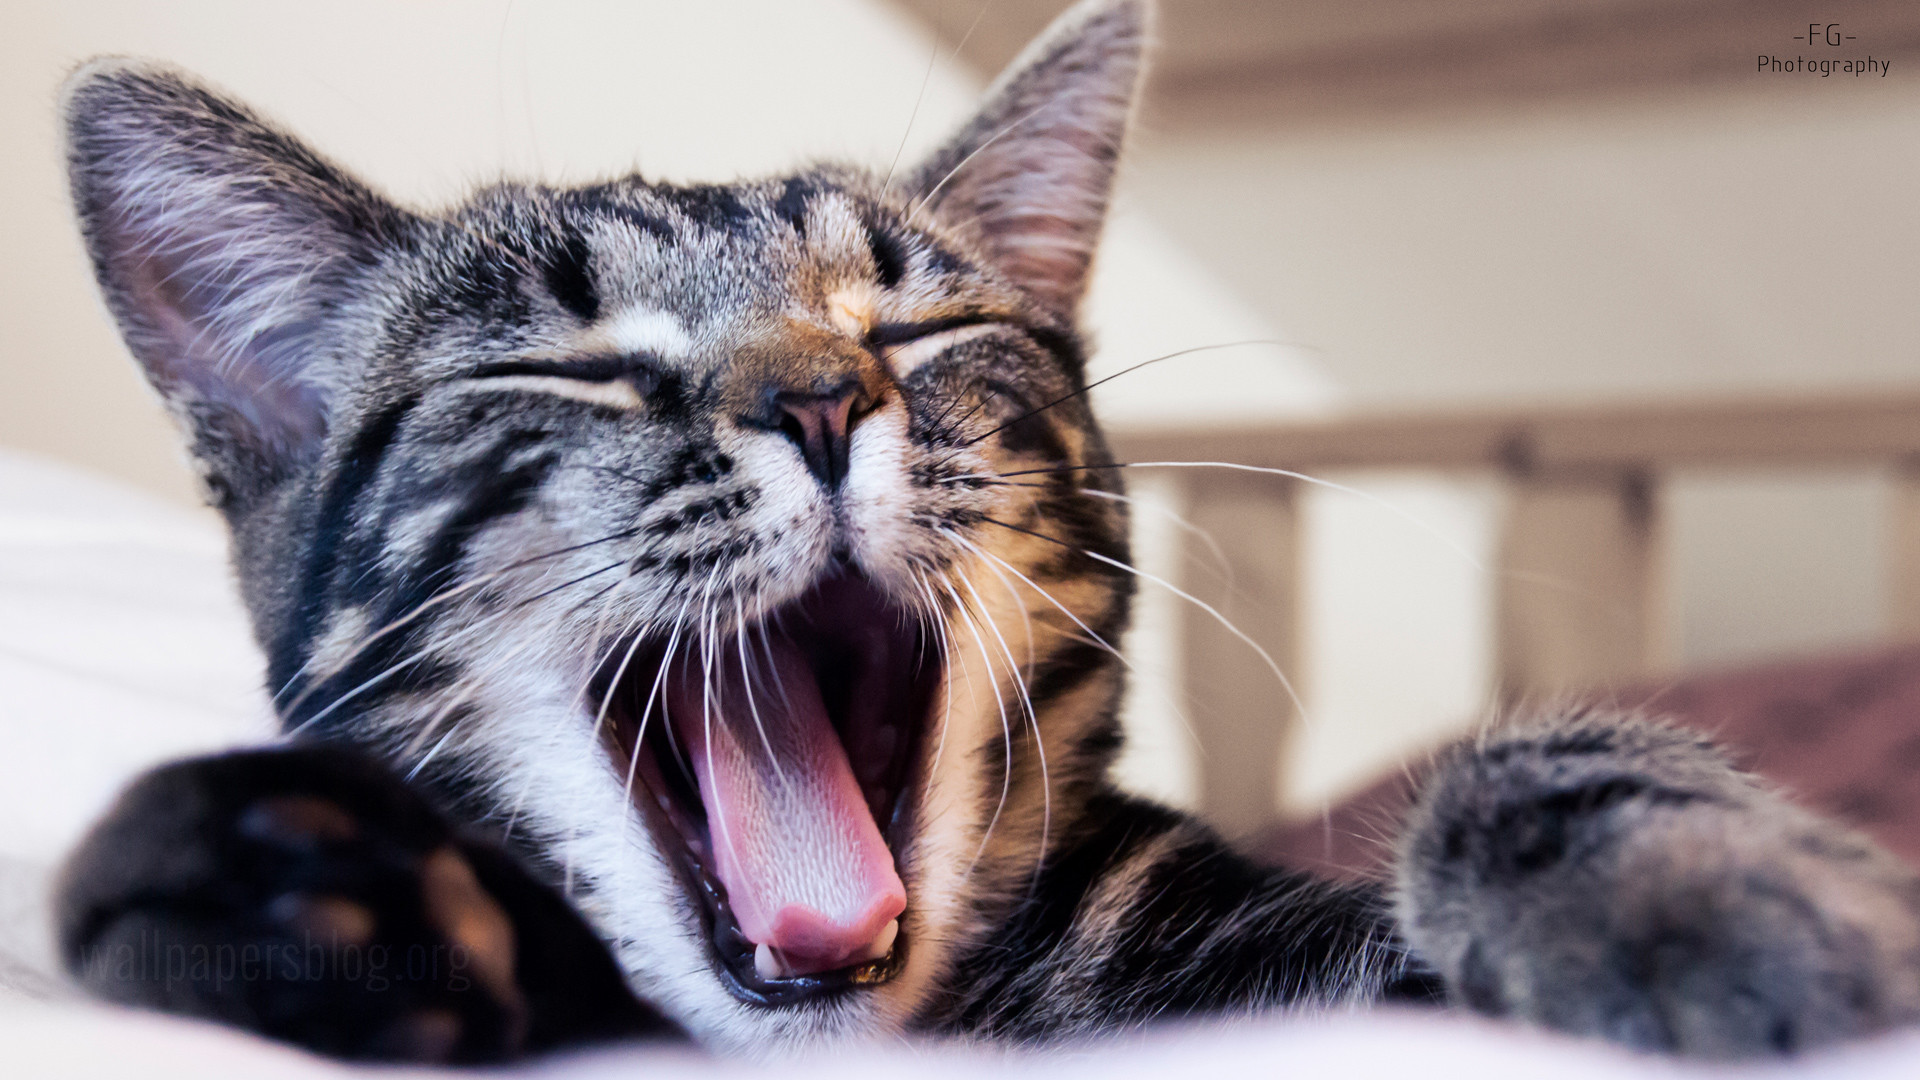 1920x1080 cat yawning full hd 1080p wallpaper desktop background